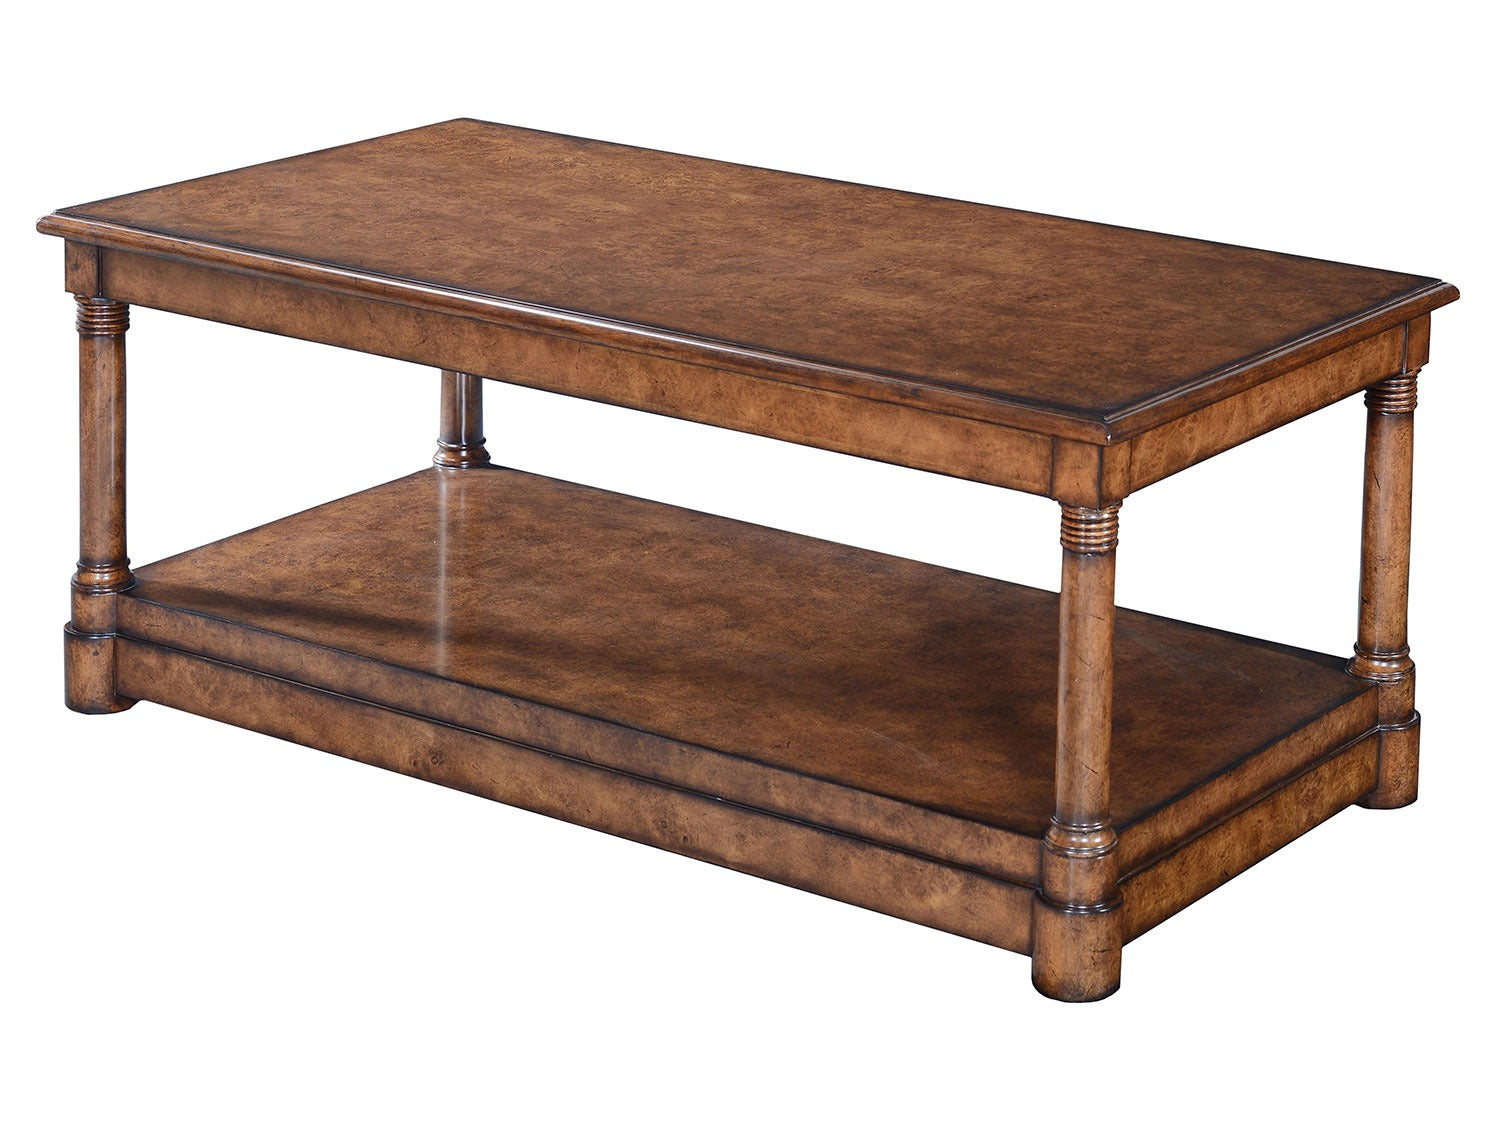 Empire style coffee table - Burr oak